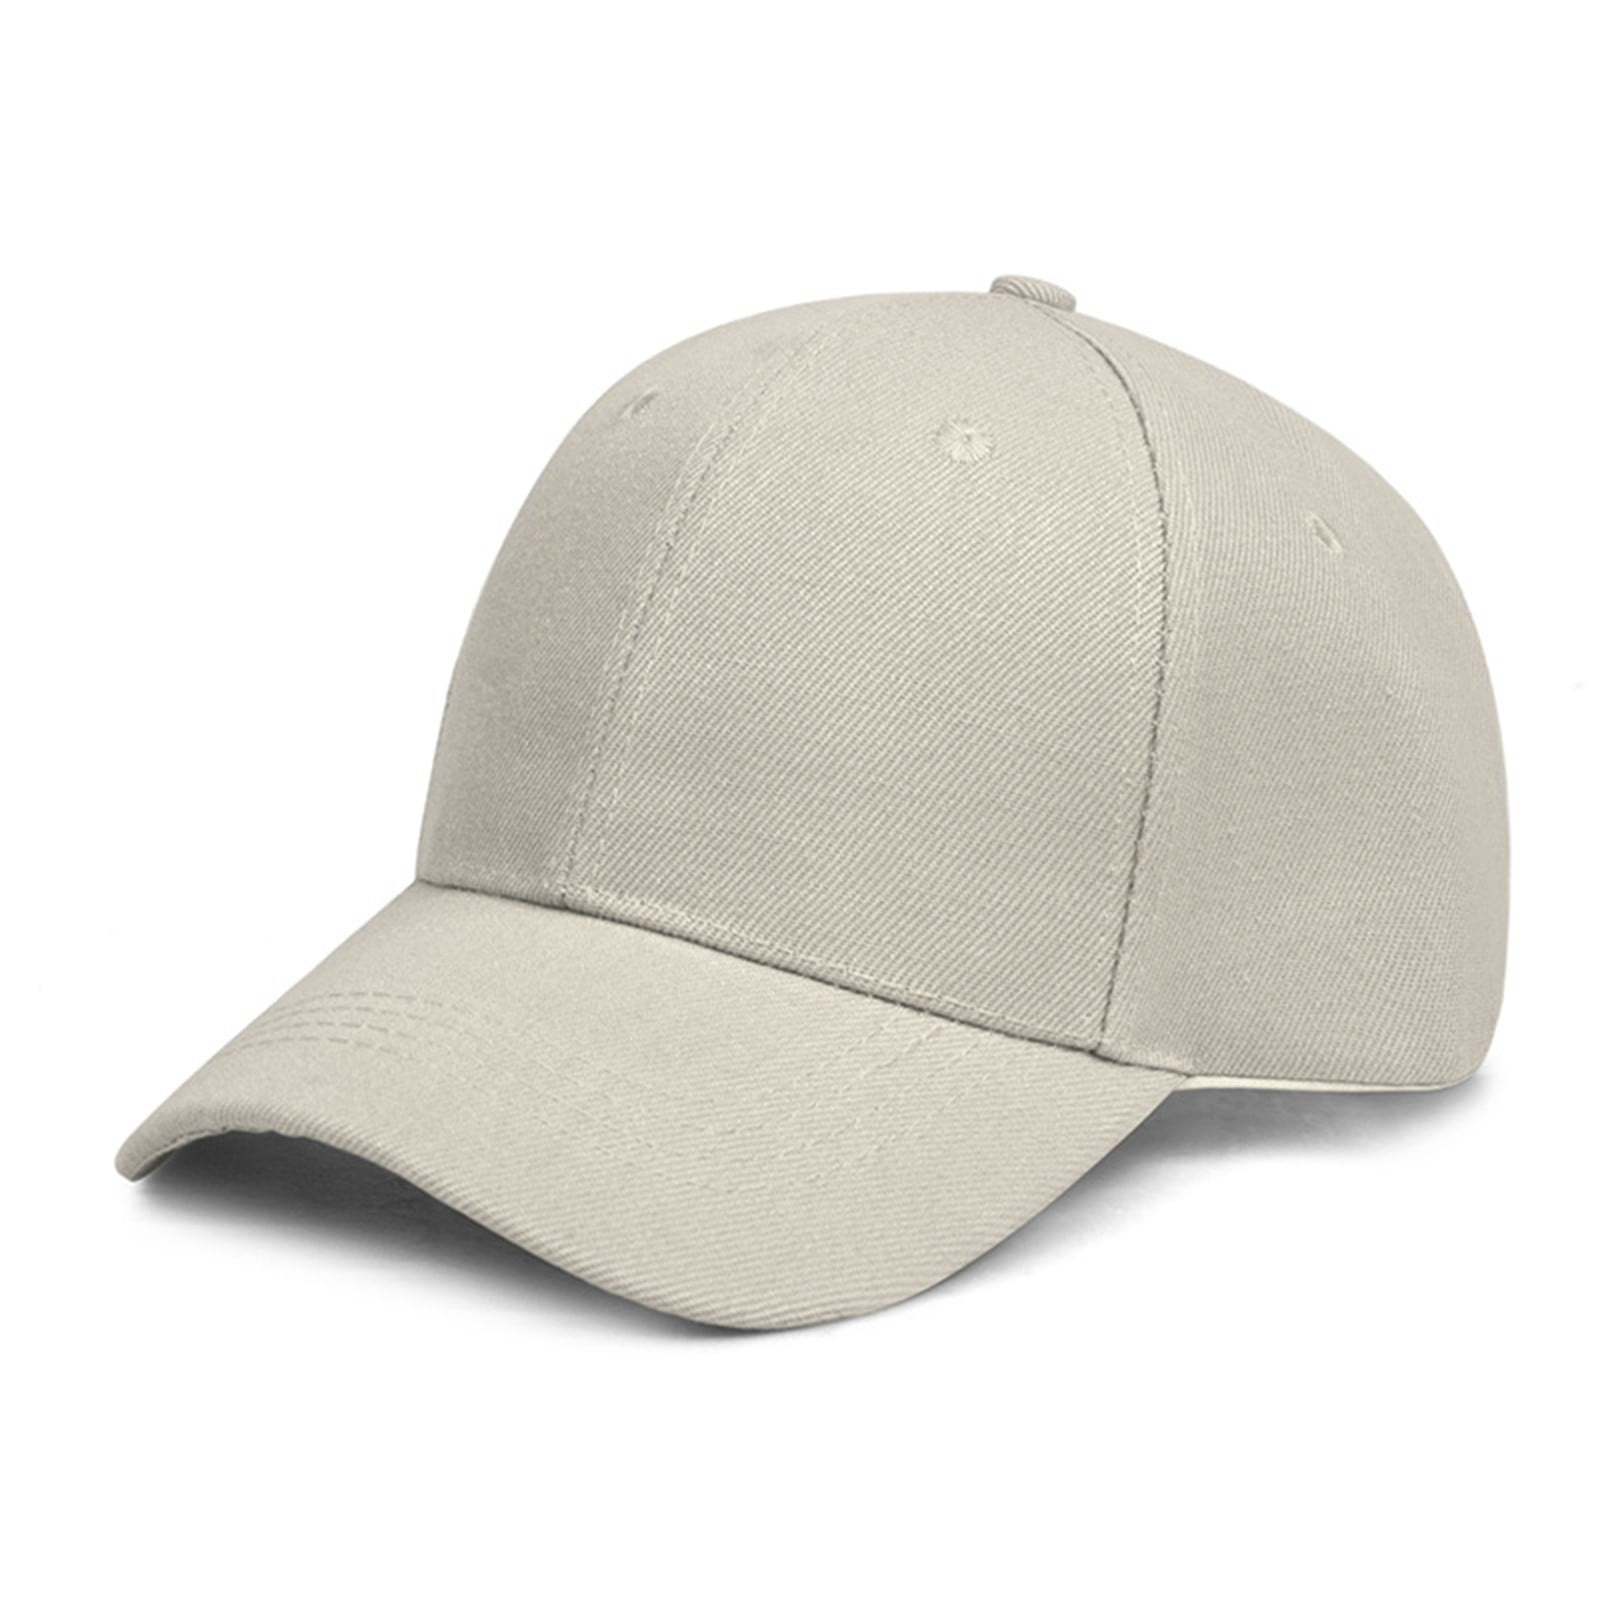 Simplmasygenix Summer Hats For Men Clearance Men Sun Cap Fishing Hat Quick  Dry Outdoor UV Protection Cap